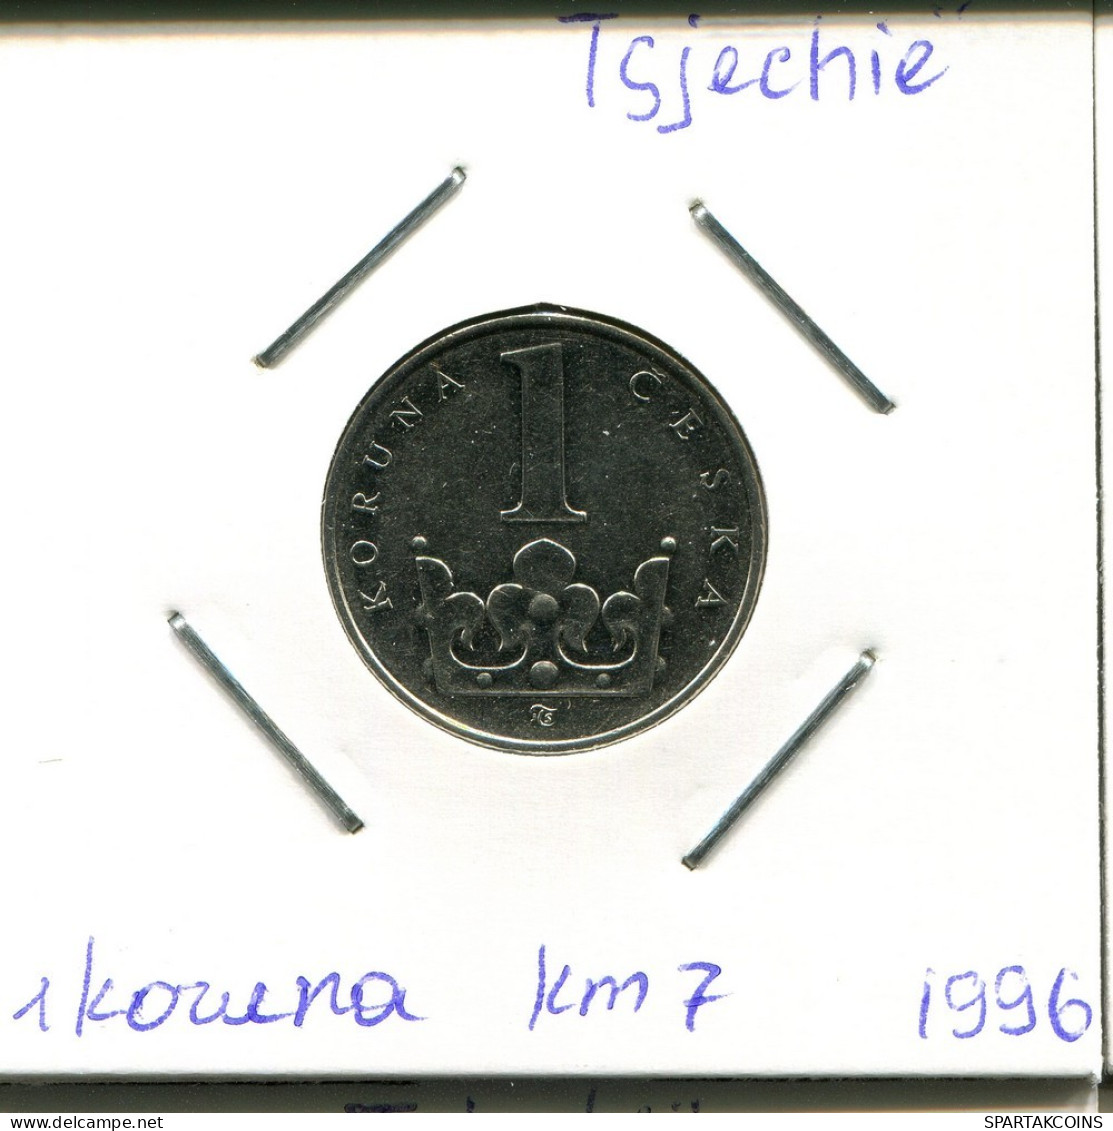 1 KORUNA 1996 CZECH REPUBLIC Coin #AP740.2.U.A - Tsjechië